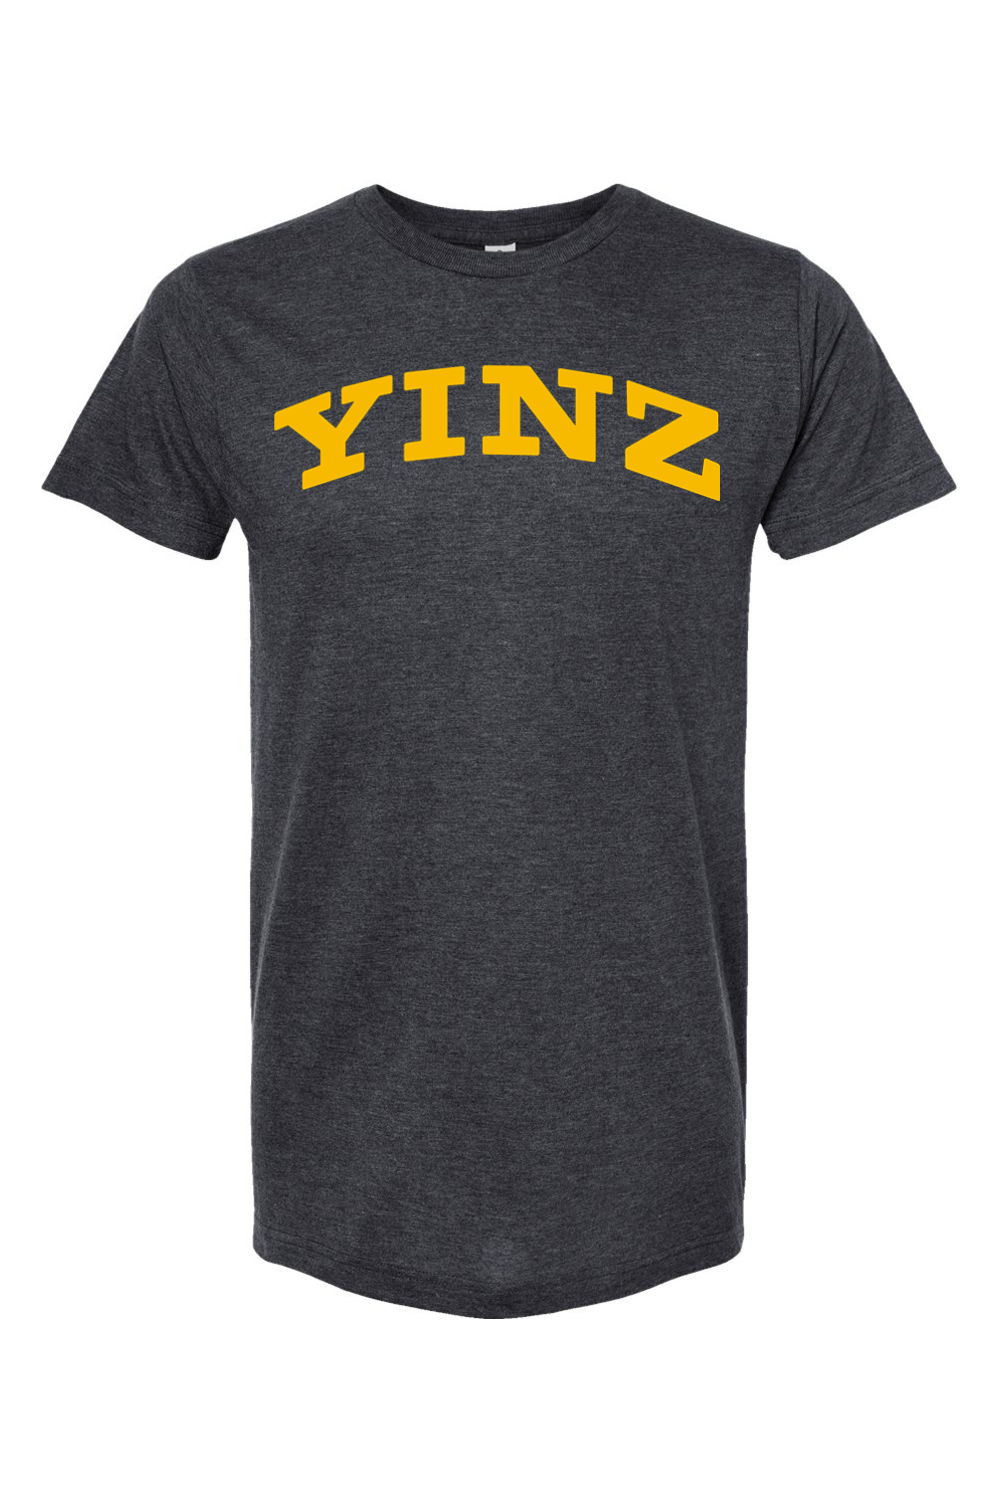 YINZ - Collegiate - Yinzylvania